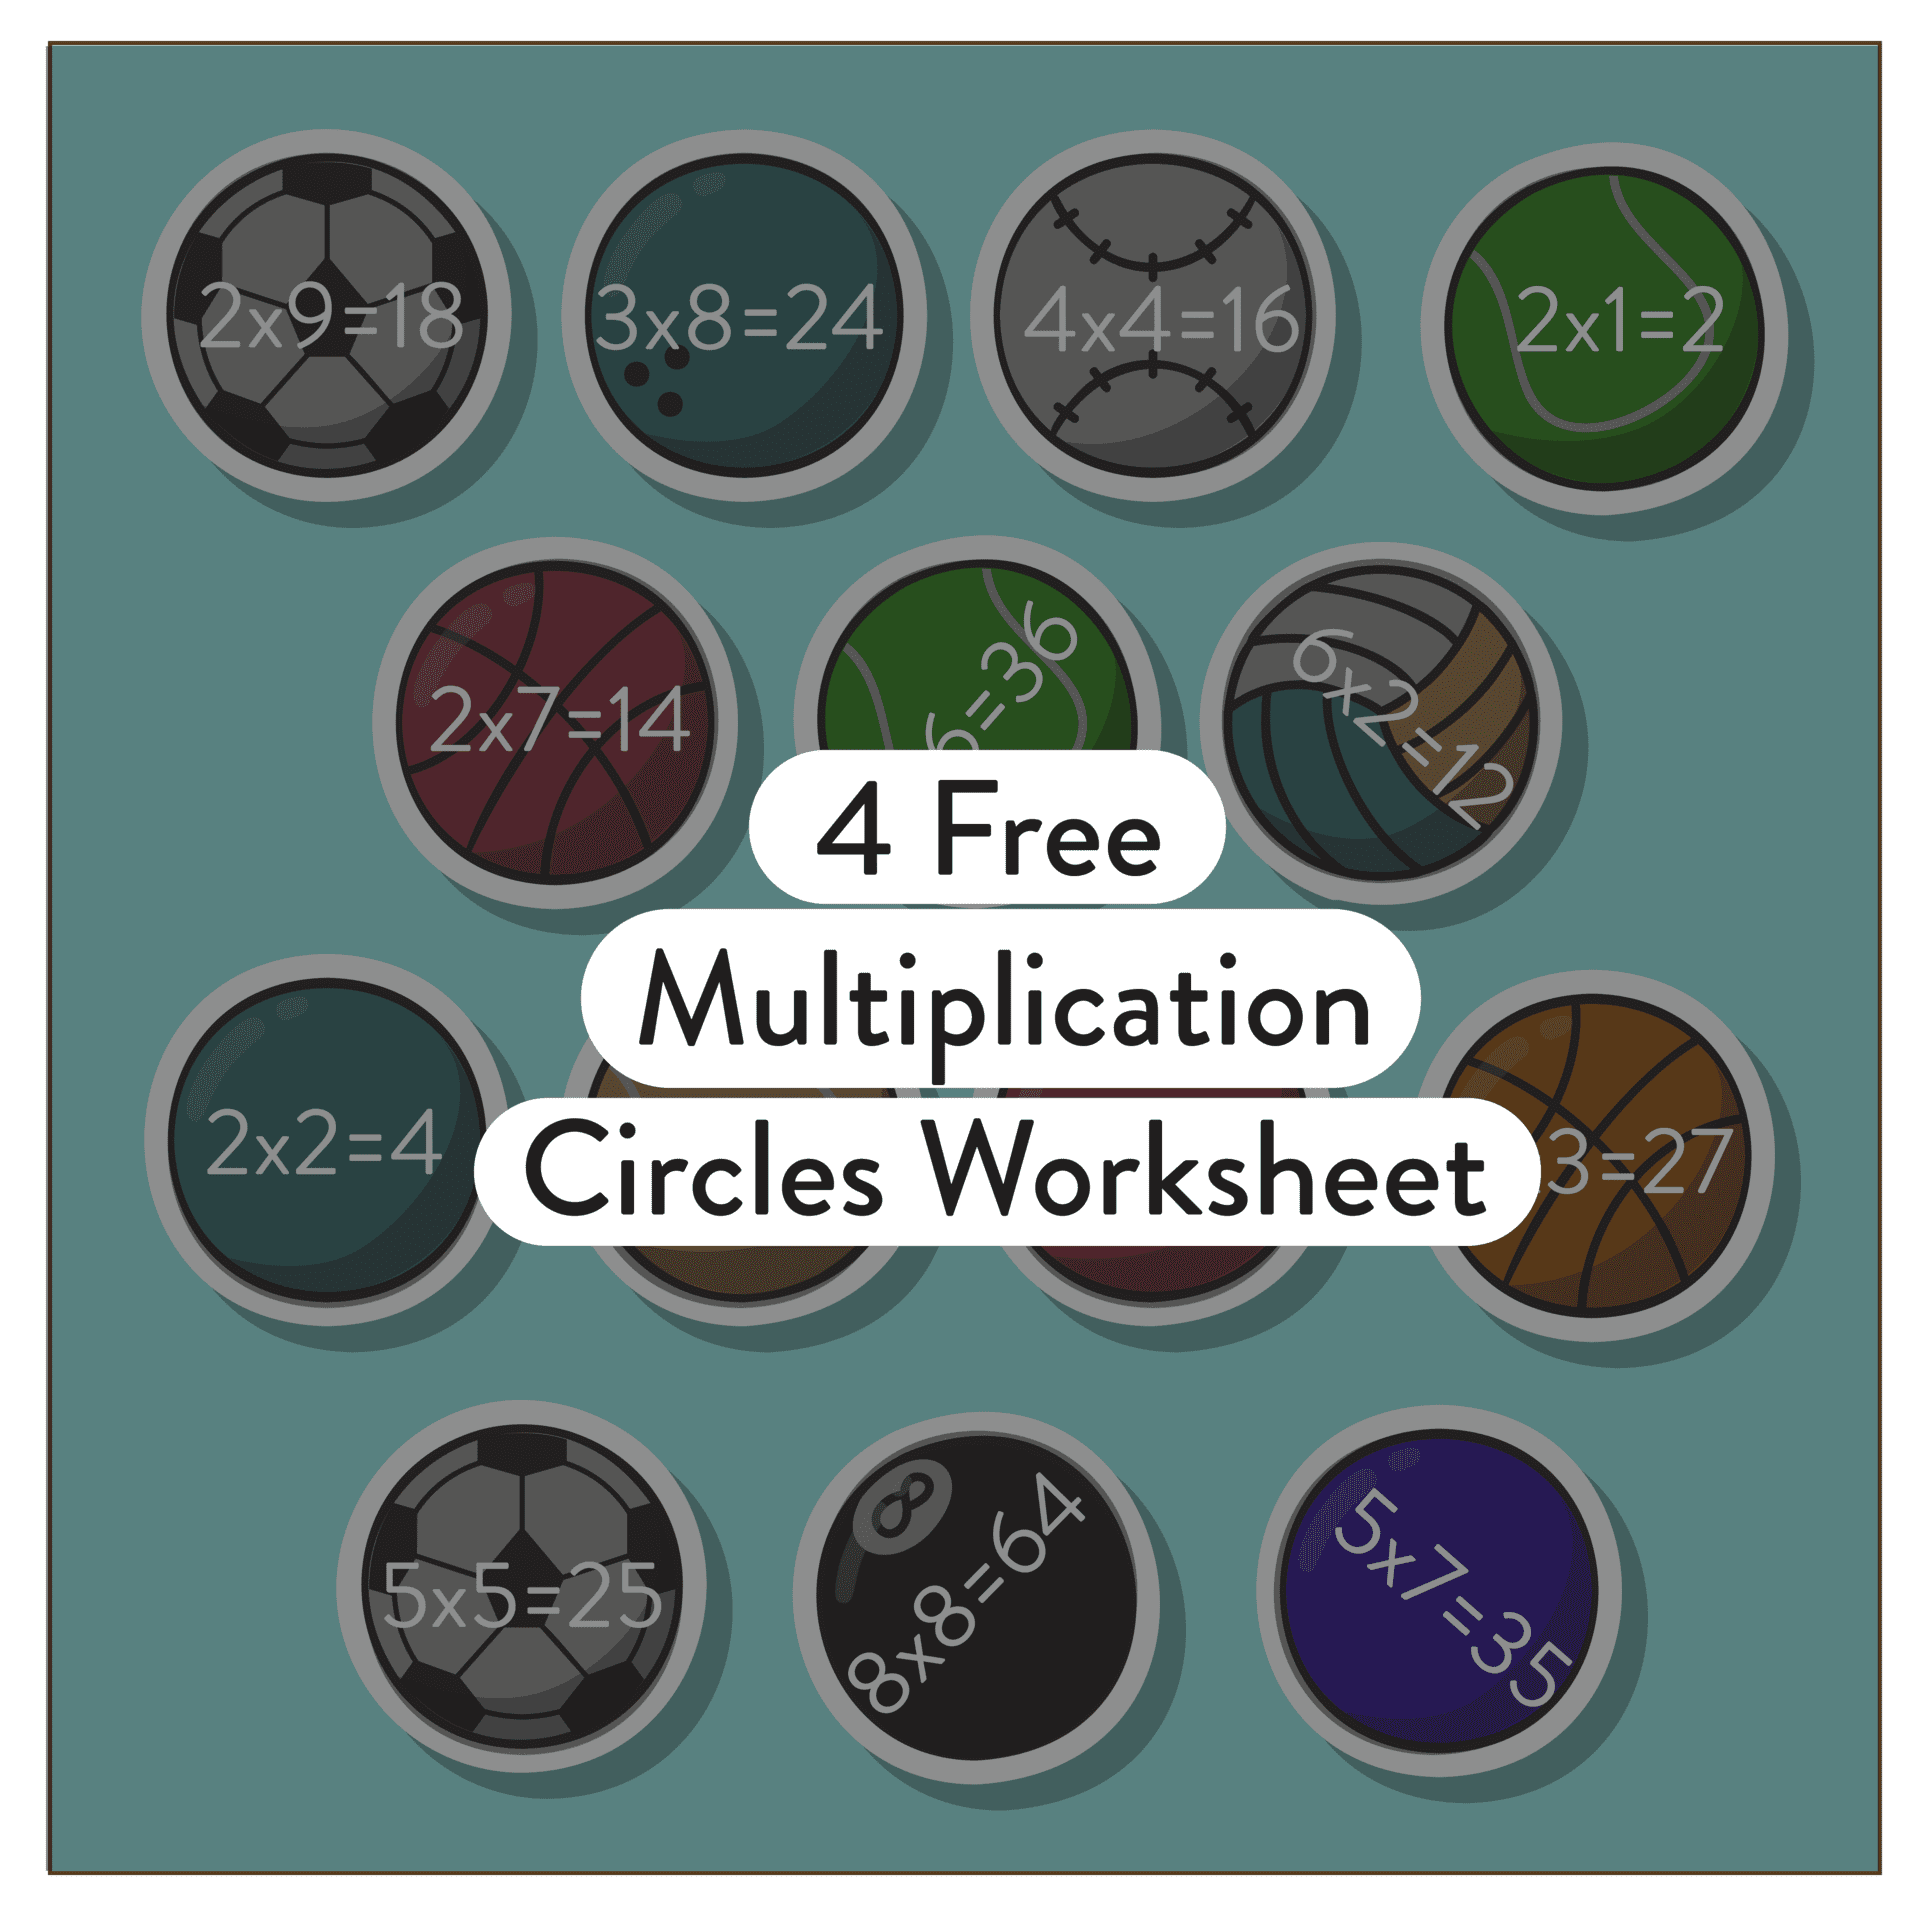 using circles to describe multiplication circles 